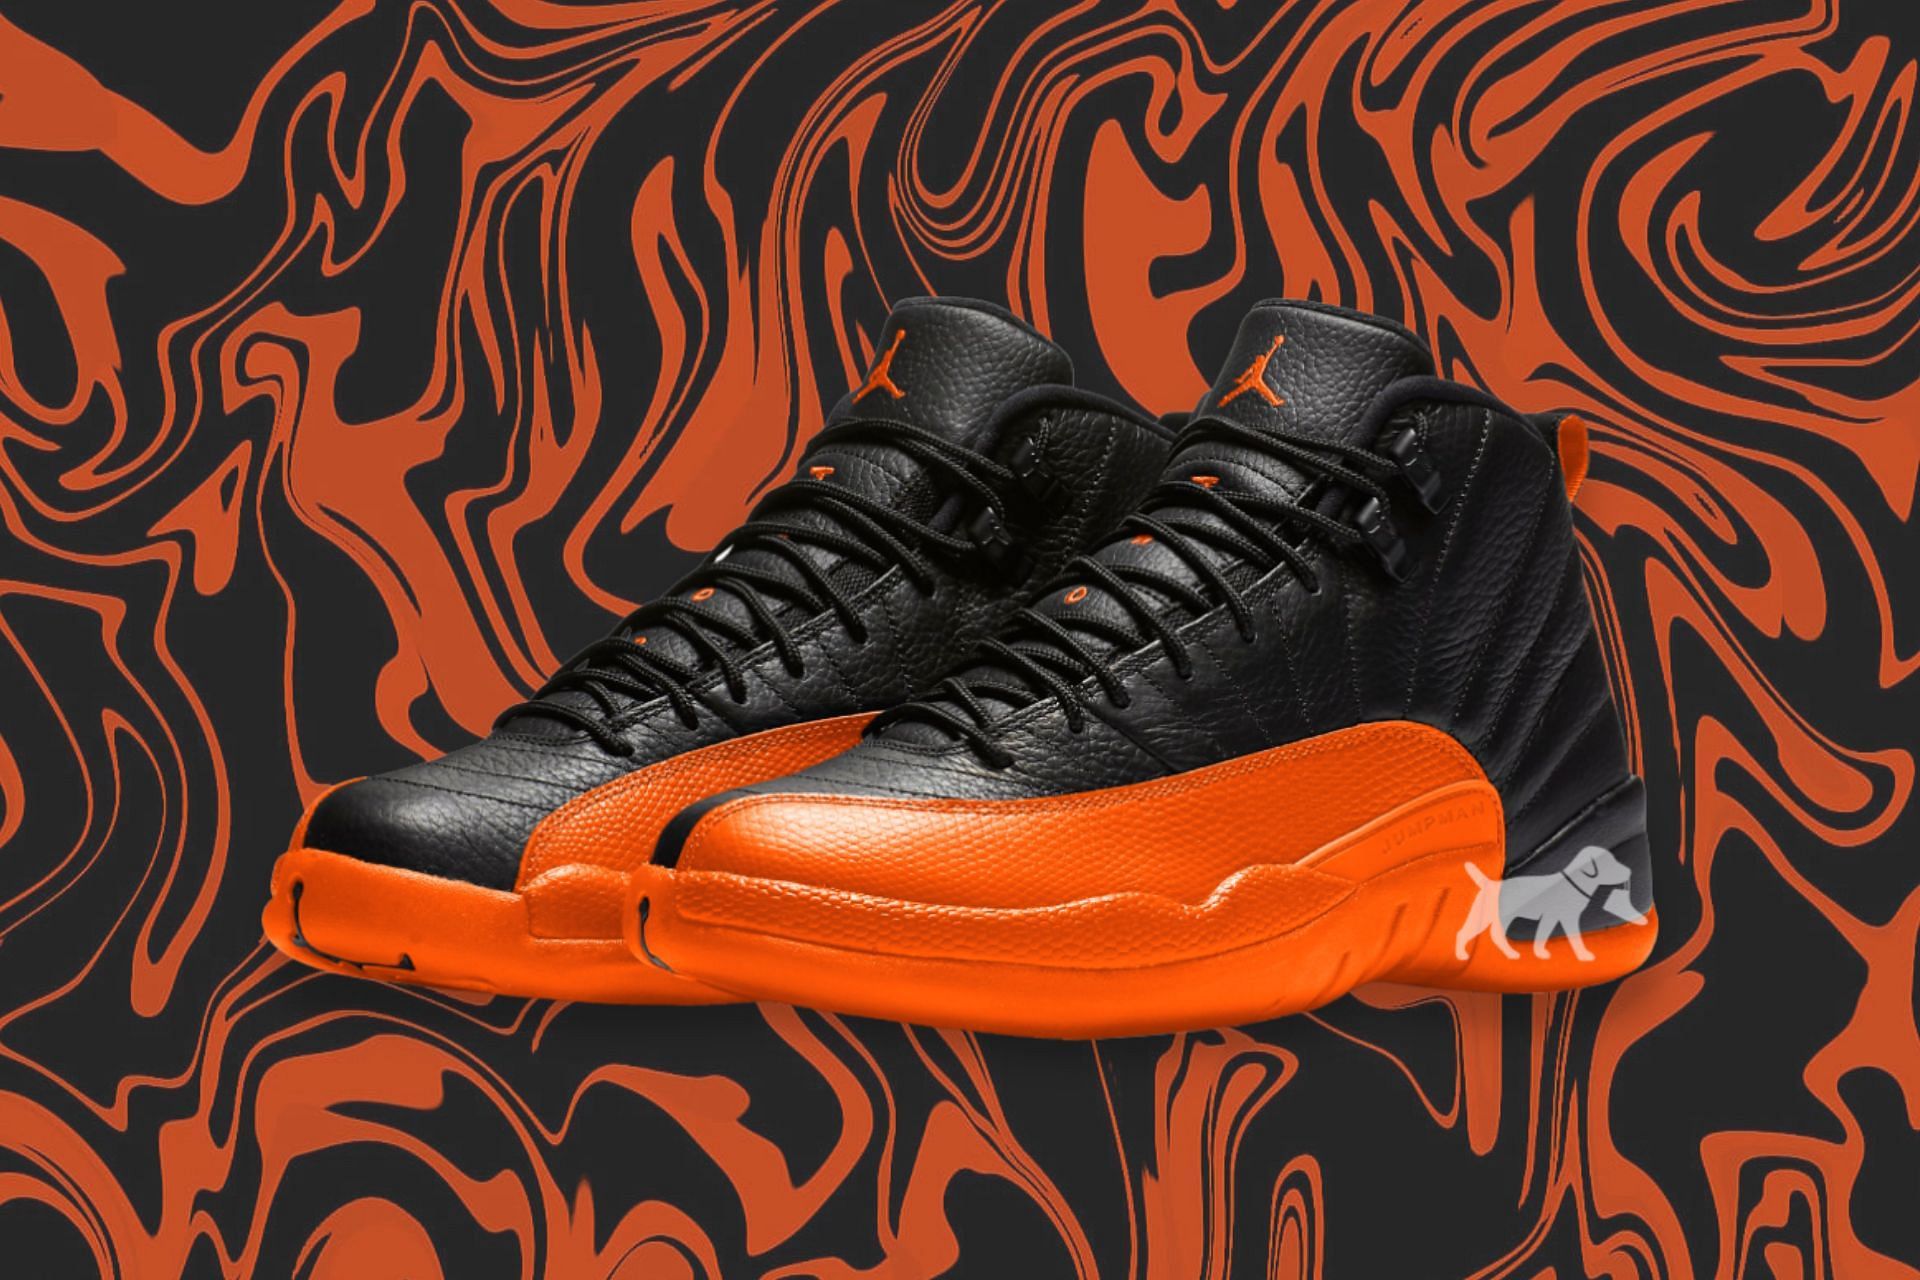 Take a Closer Look at the Upcoming Air Jordan 12 Brilliant Orange Shoes (Image via Nike)